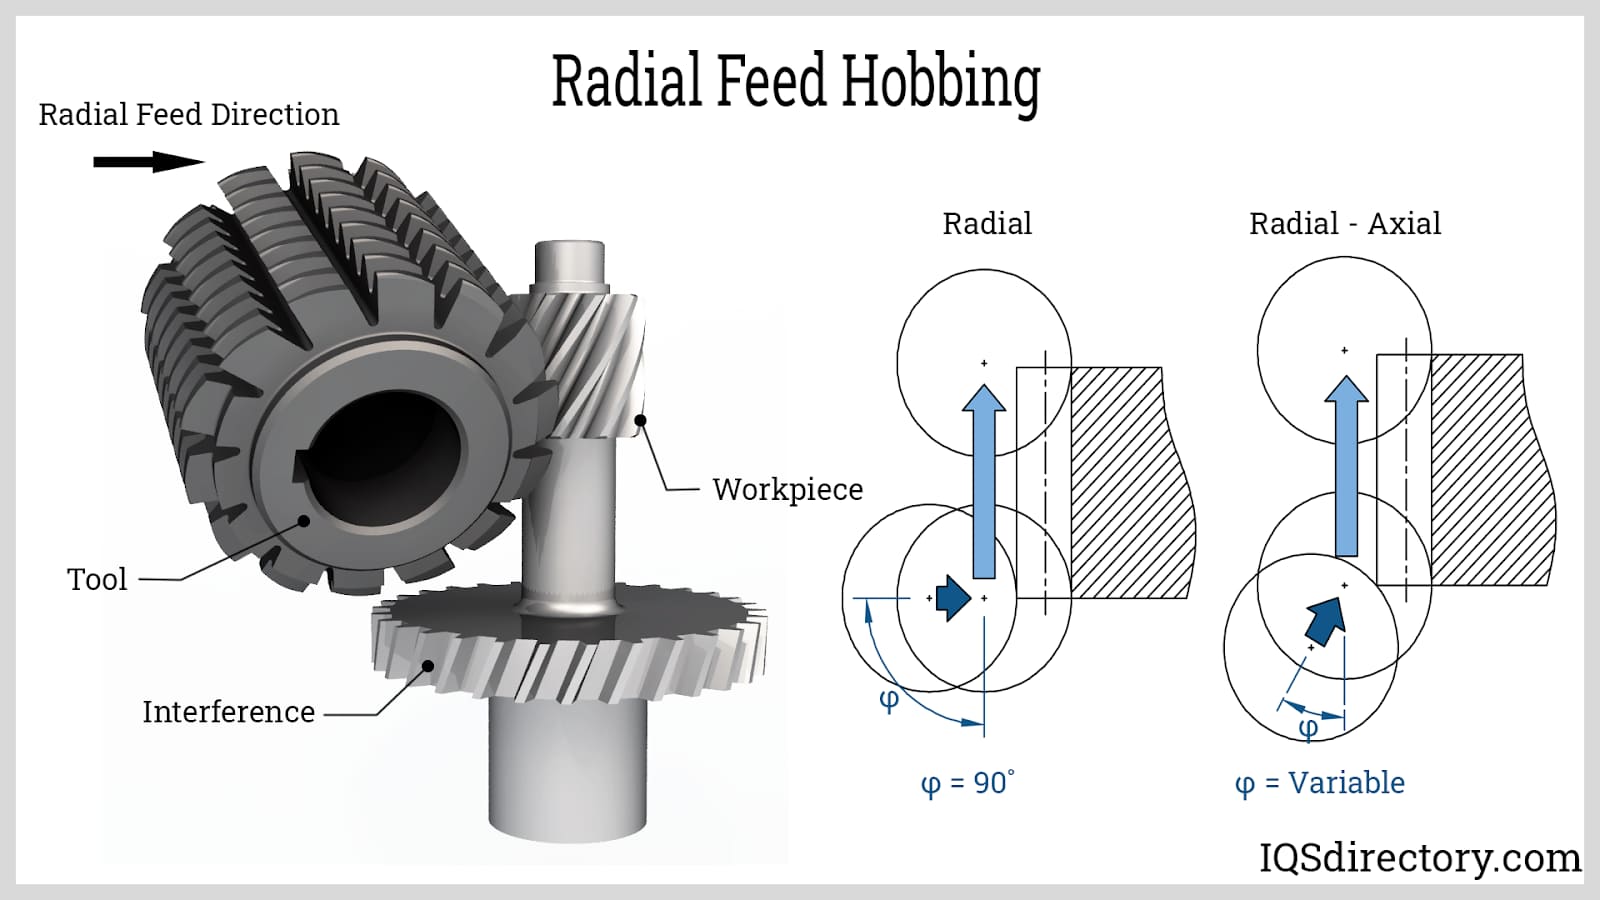 Radial Feed Hobbing